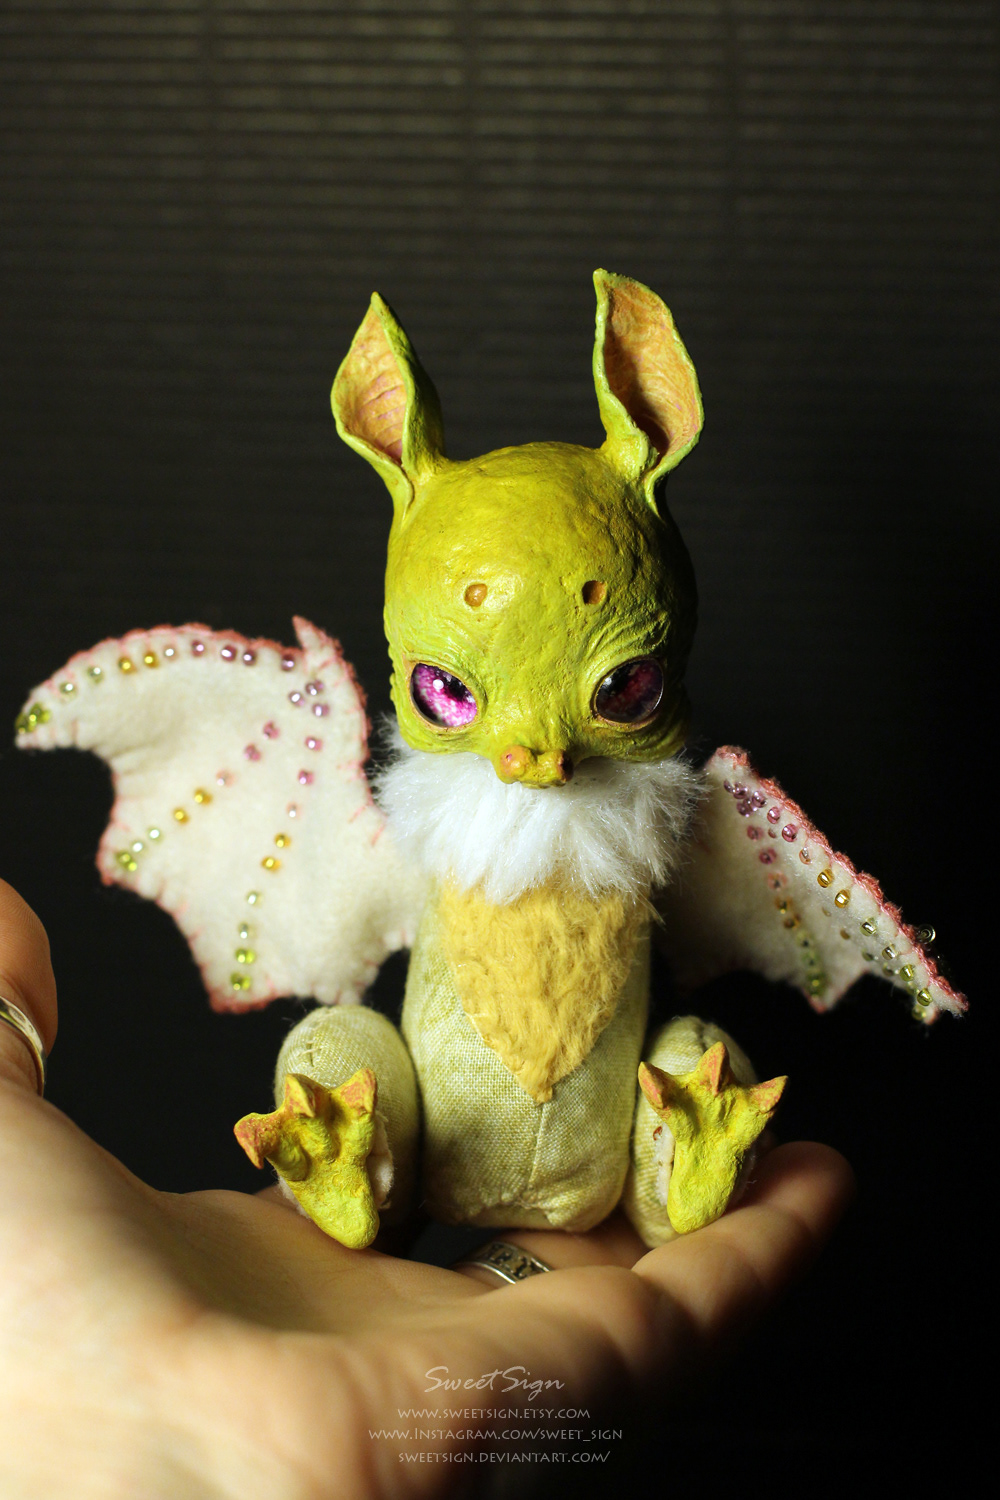 doll bat creature art handmade sculpture fantasy animal Unique ooak